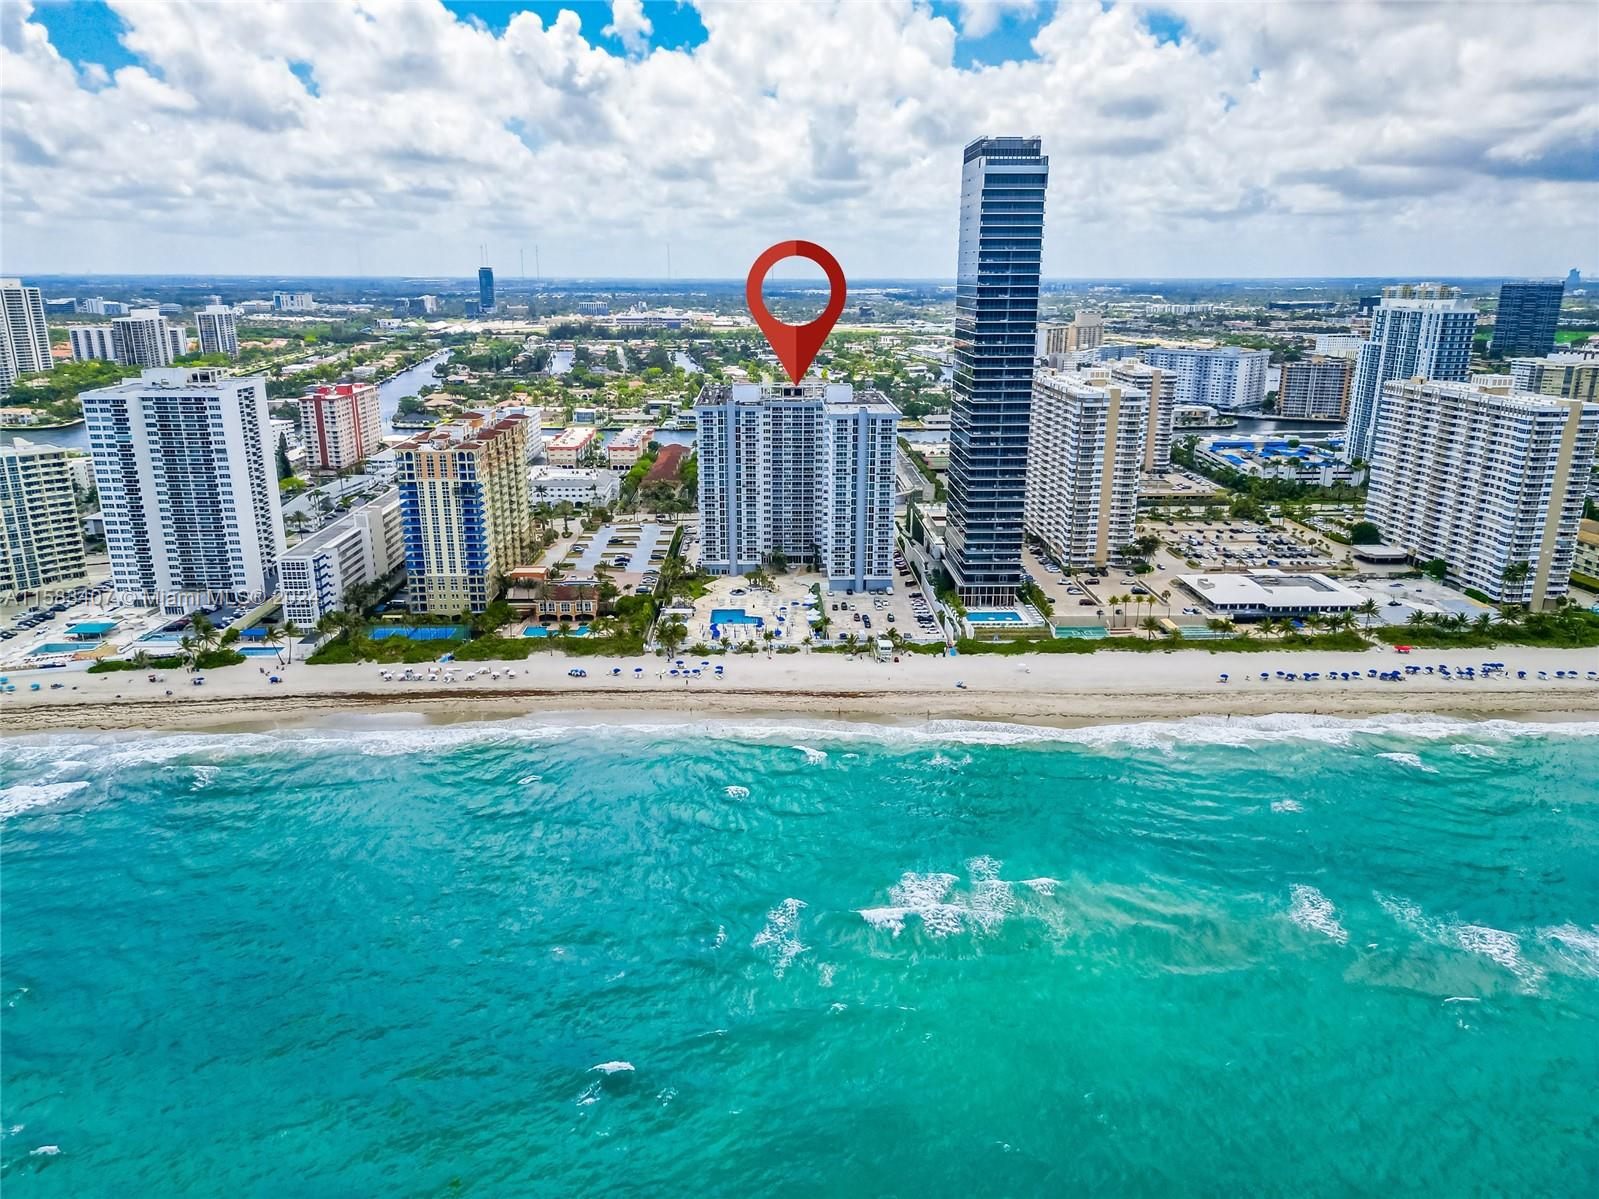 Property for Sale at 2030 S Ocean Dr 1519, Hallandale Beach, Broward County, Florida - Bedrooms: 2 
Bathrooms: 2  - $765,000